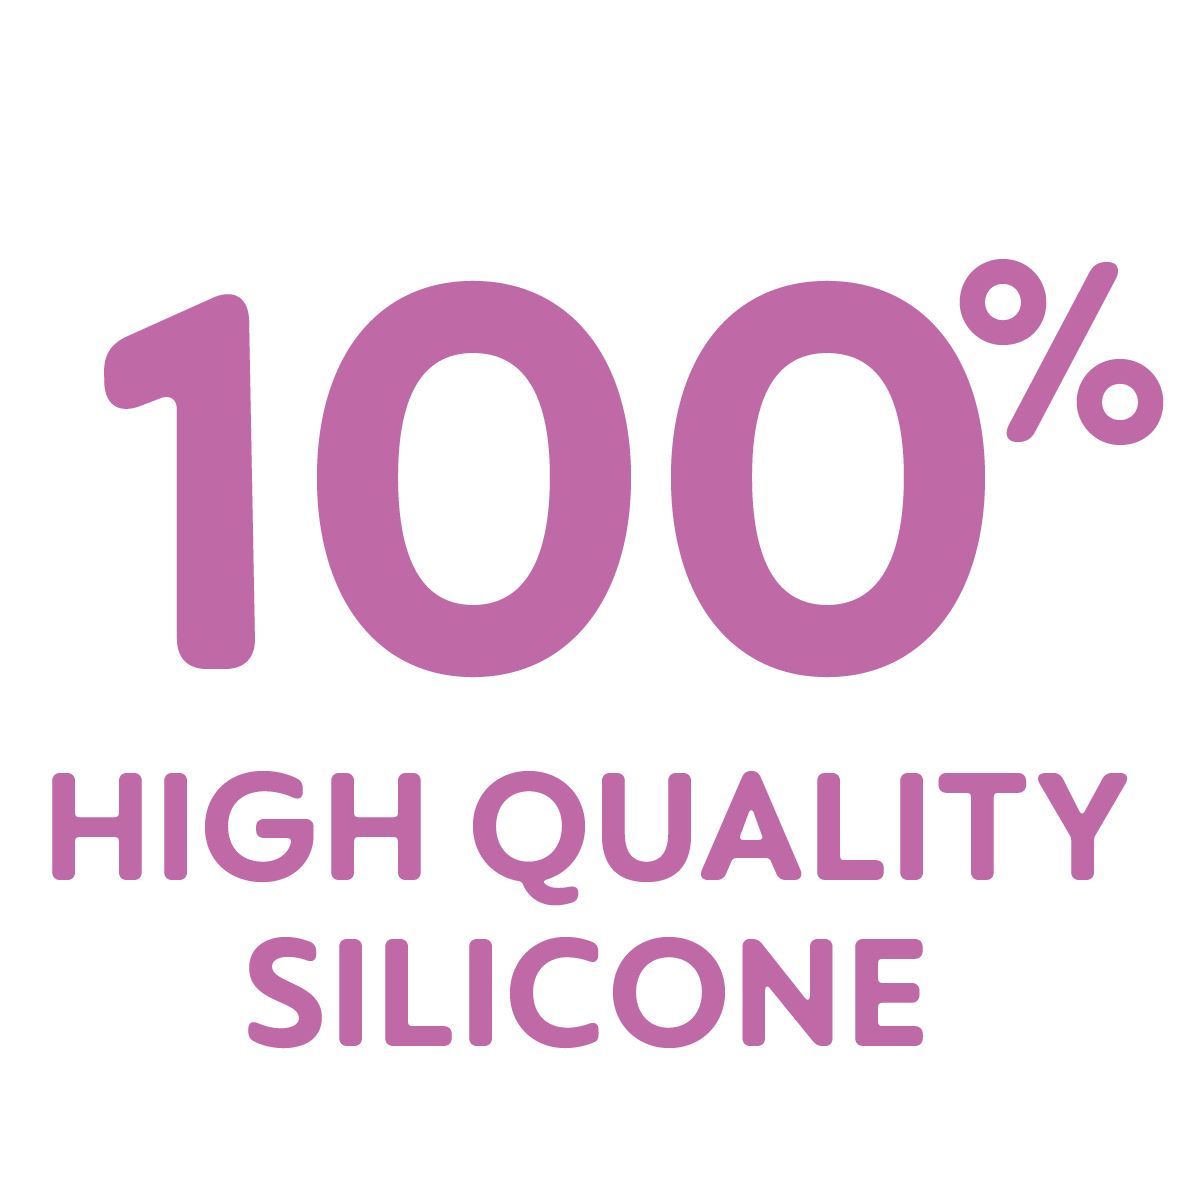 Este produto é feito de 100% silicone de alta qualidade – especialmente higiénico, duradouro e seguro